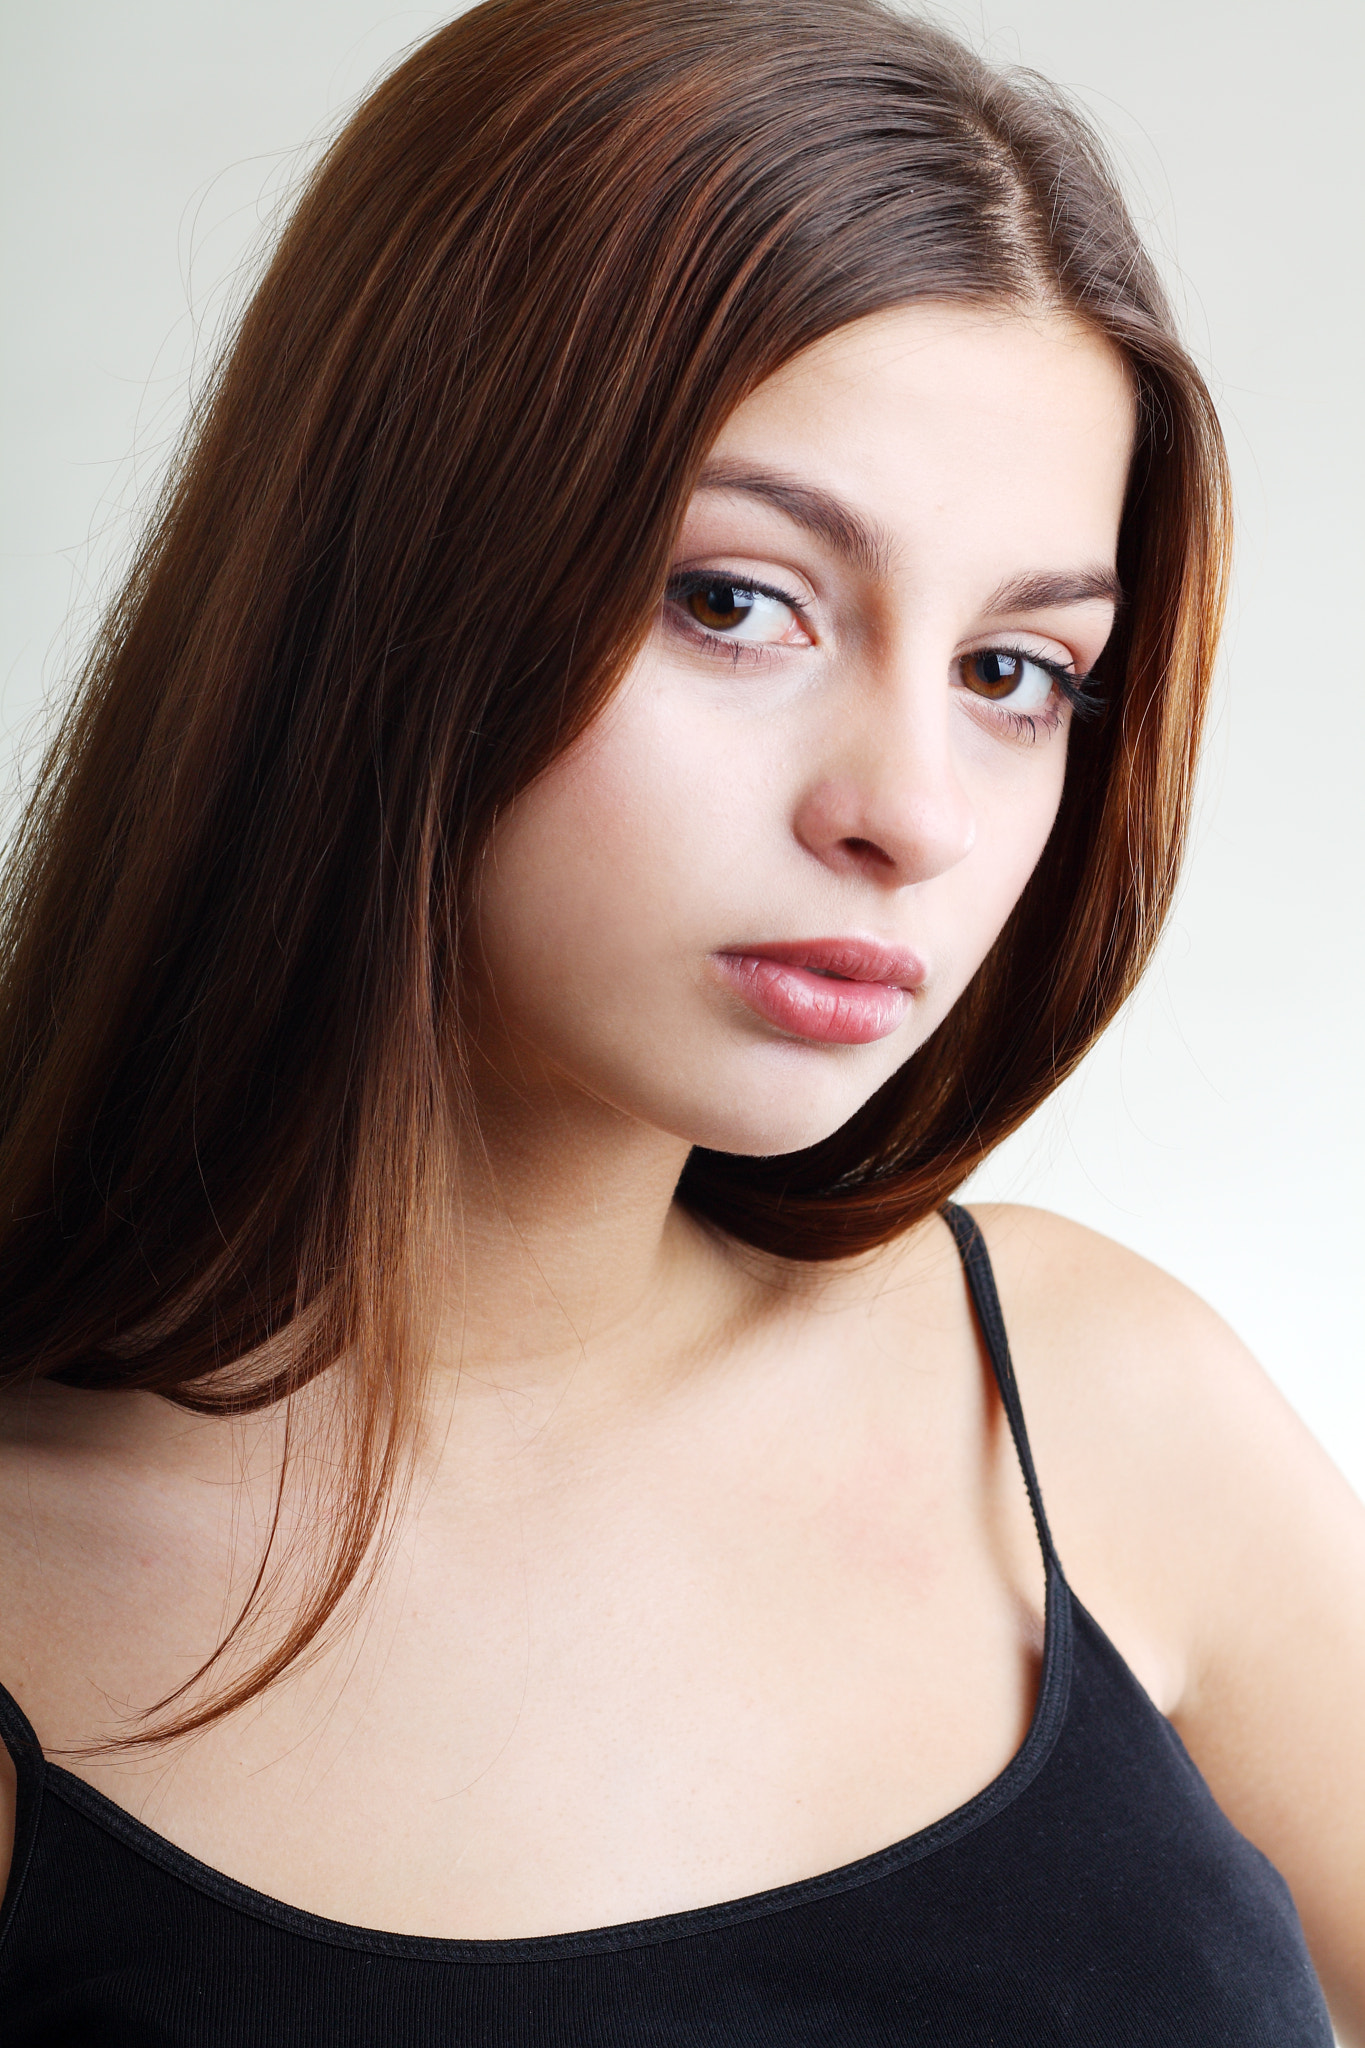 Teen Face Portrait By Olena Zaskochenko Photo 62354875 500px